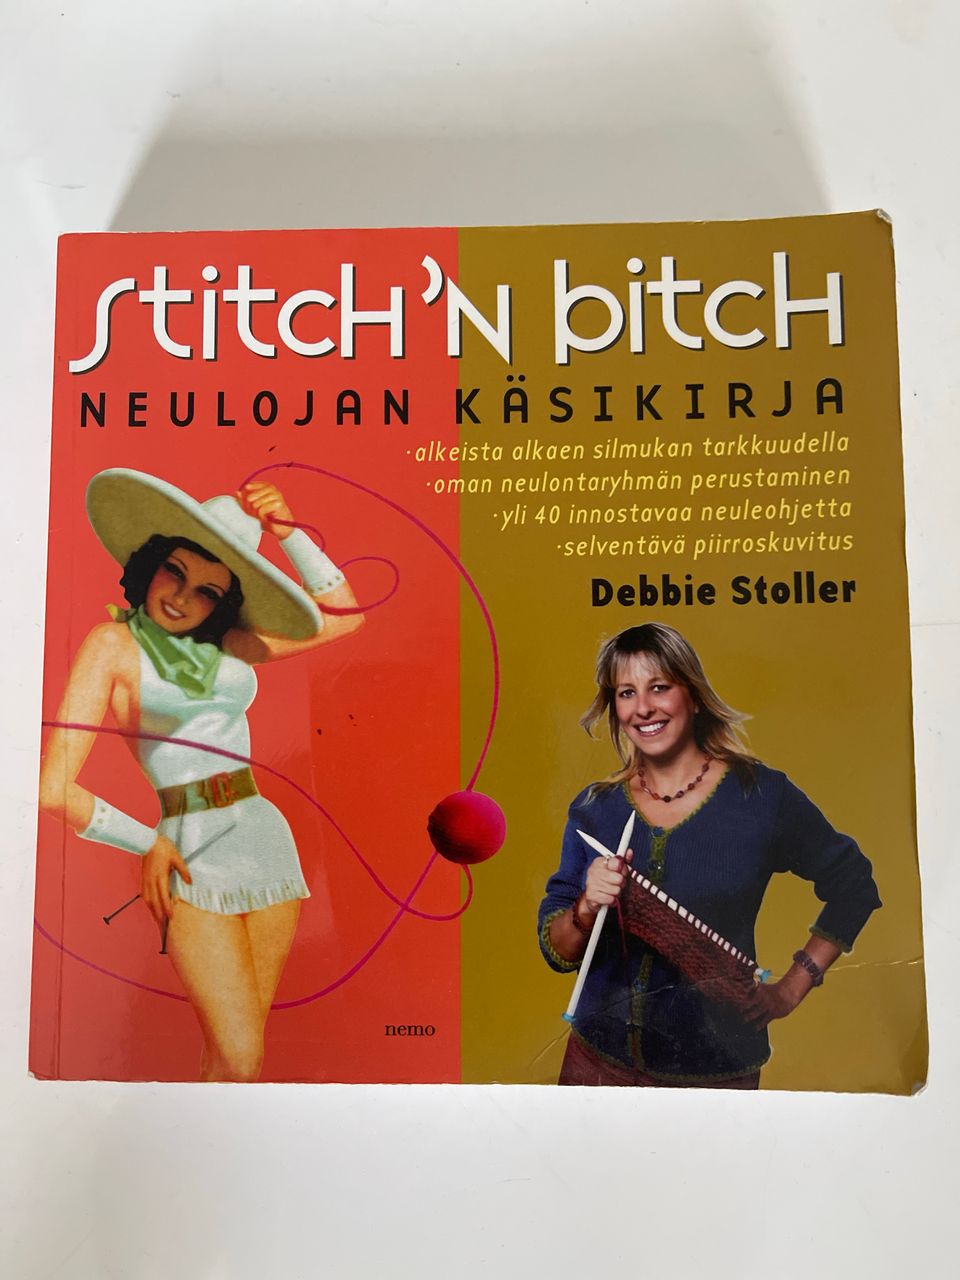 Stitch’n bitch neulojan käsikirja